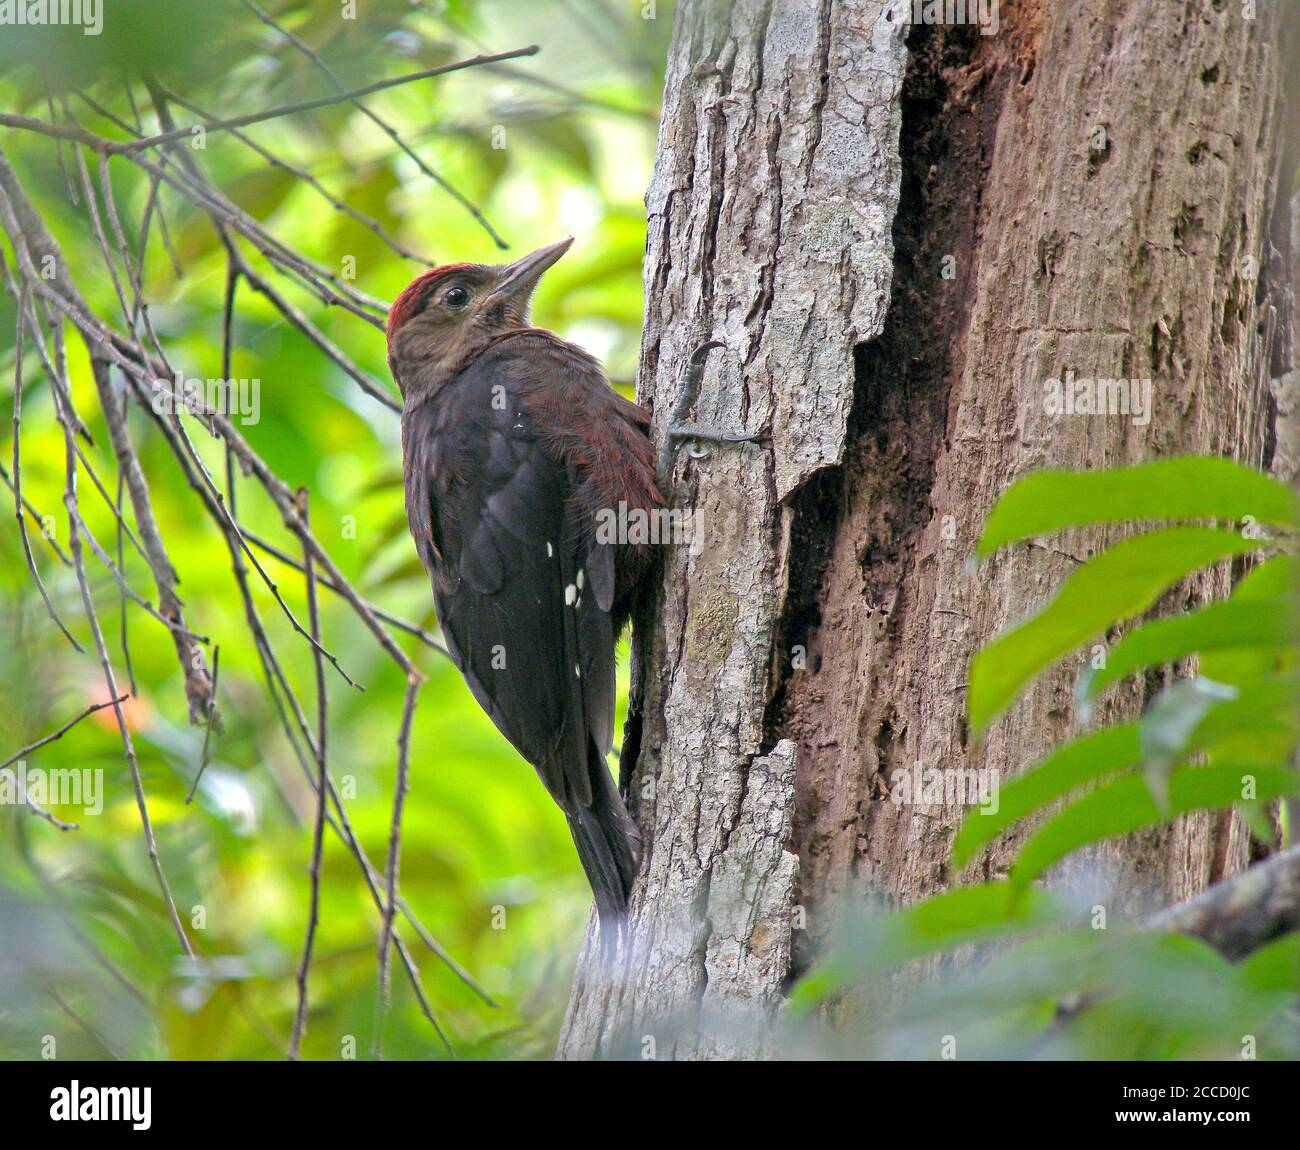 Critically Endangered Okinawa woodpecker (Dendrocopos noguchii) clinging to a tree on Okinawa, Japan. Stock Photo